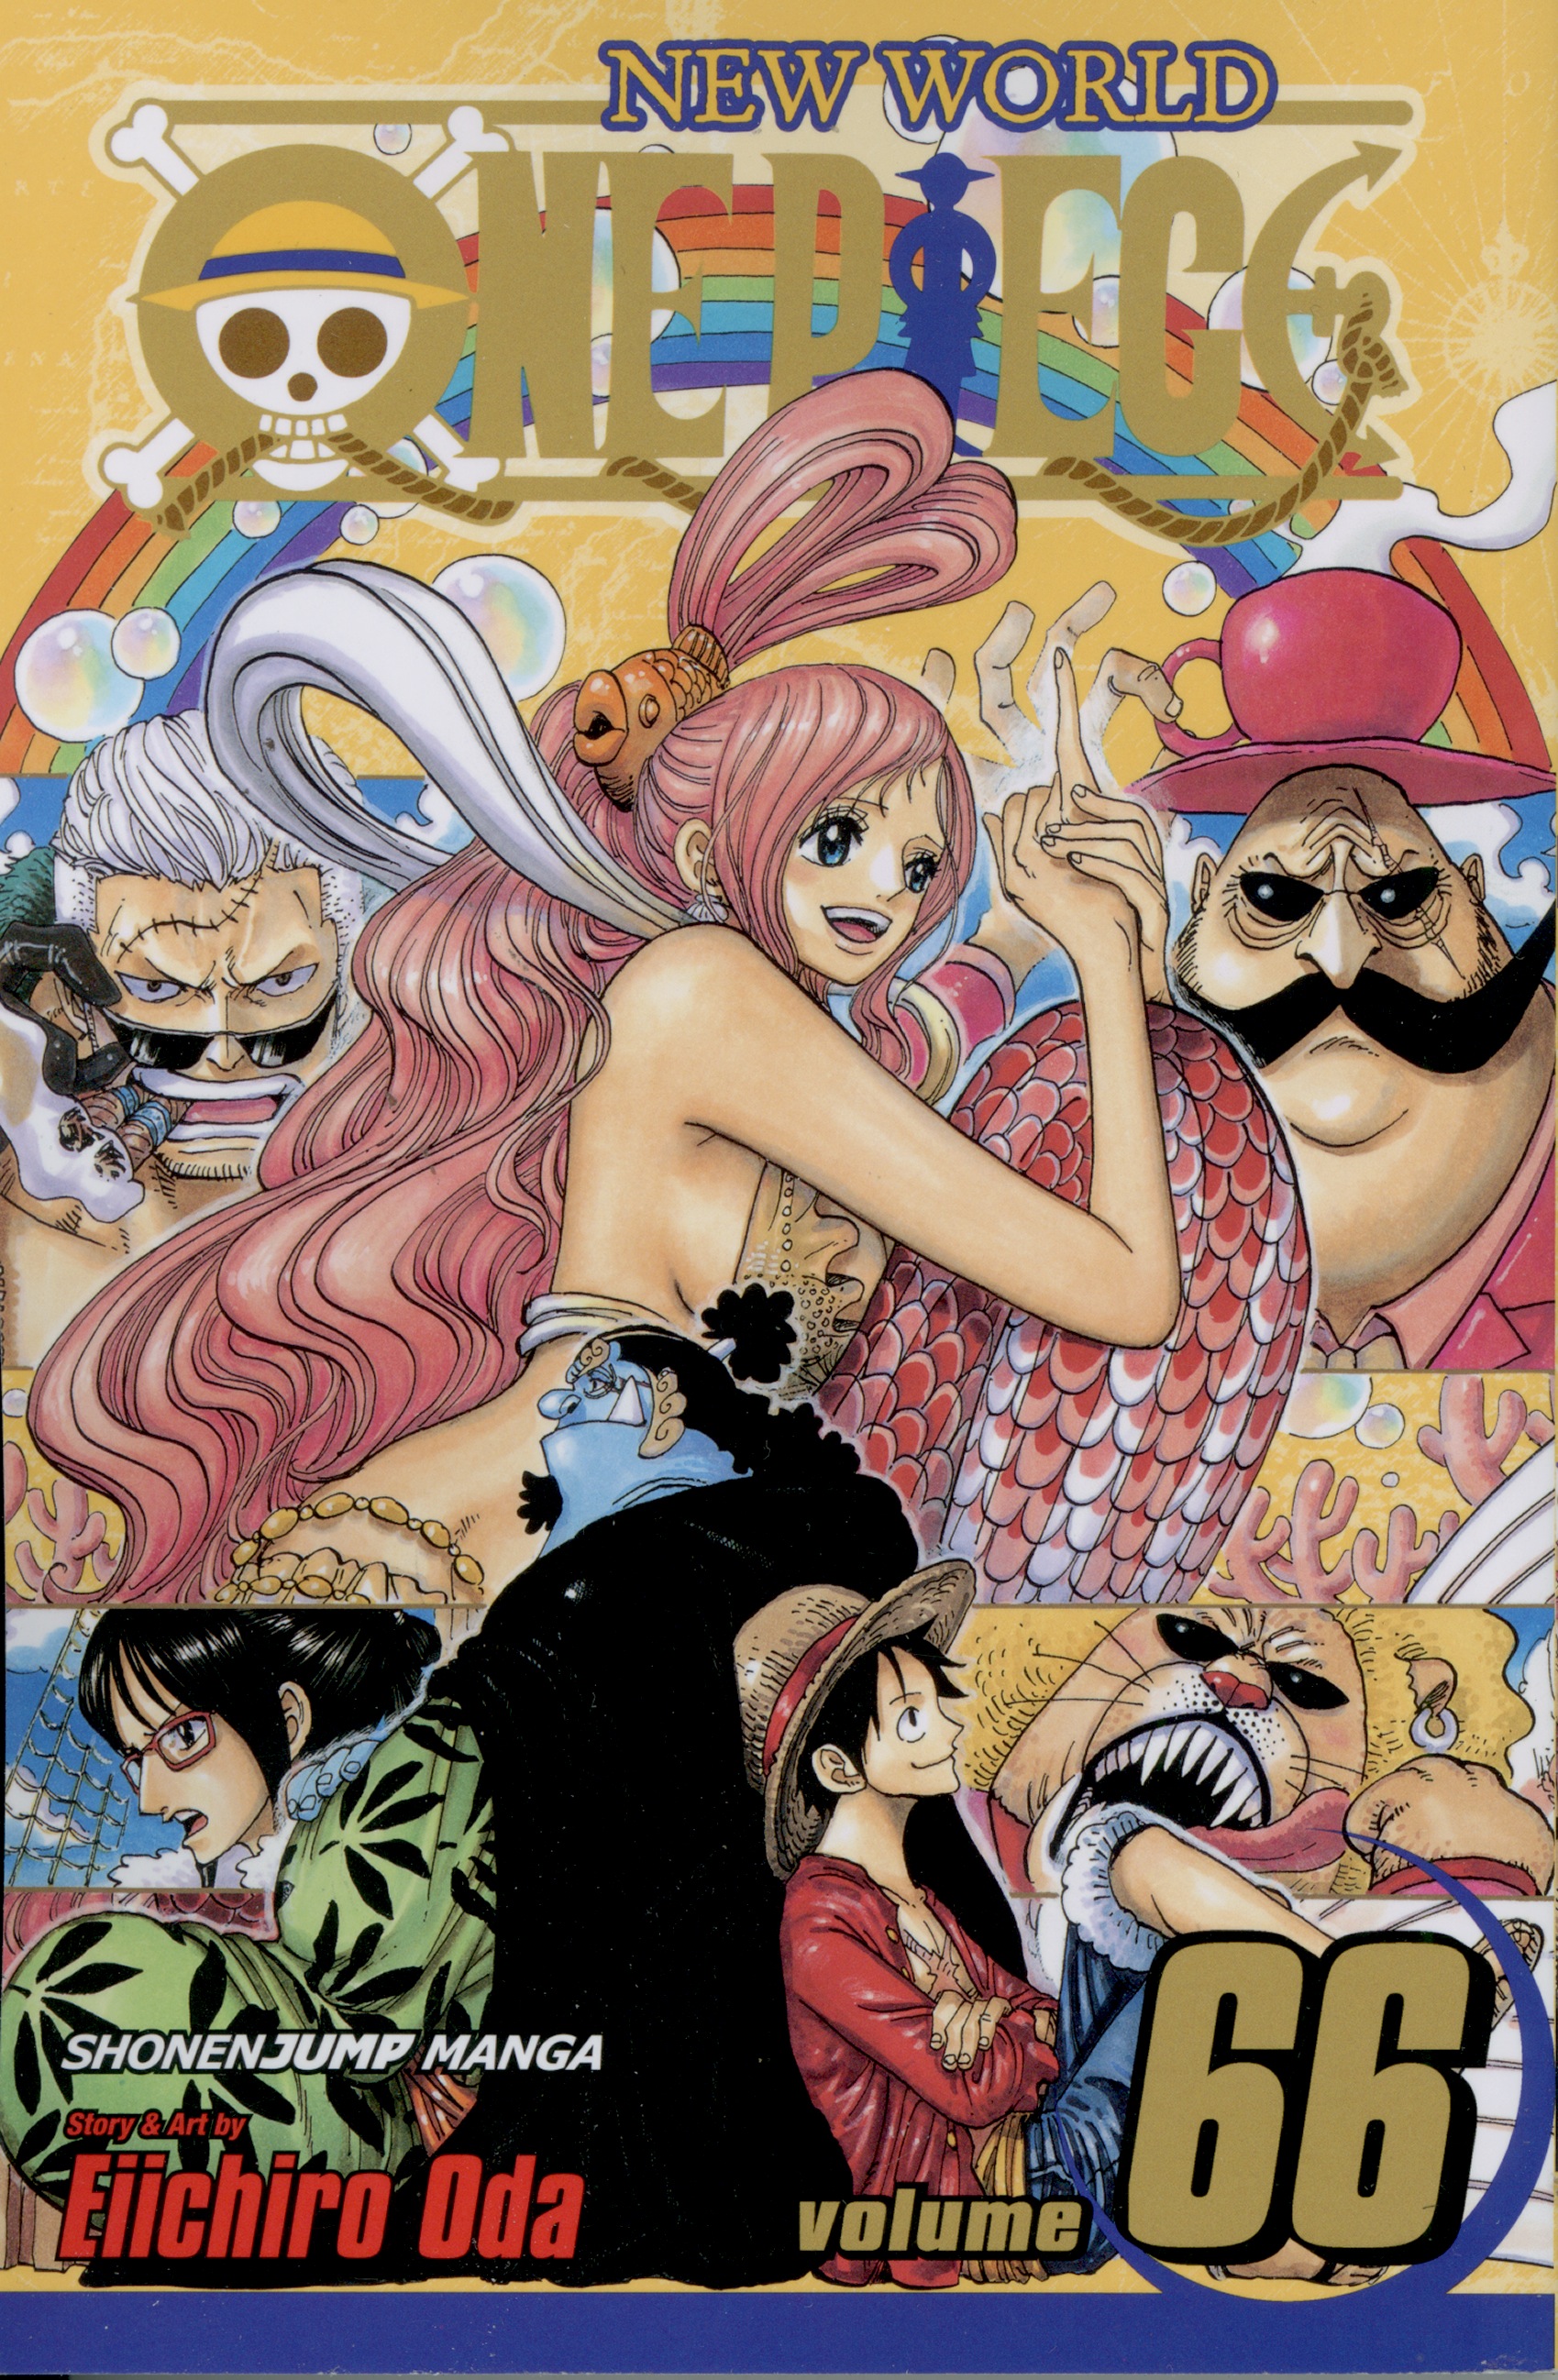 One Piece One Piece Volume 66 By Eiichiro Oda Published By Viz Media Llc Forbiddenplanet Com Uk And Worldwide Cult Entertainment Megastore